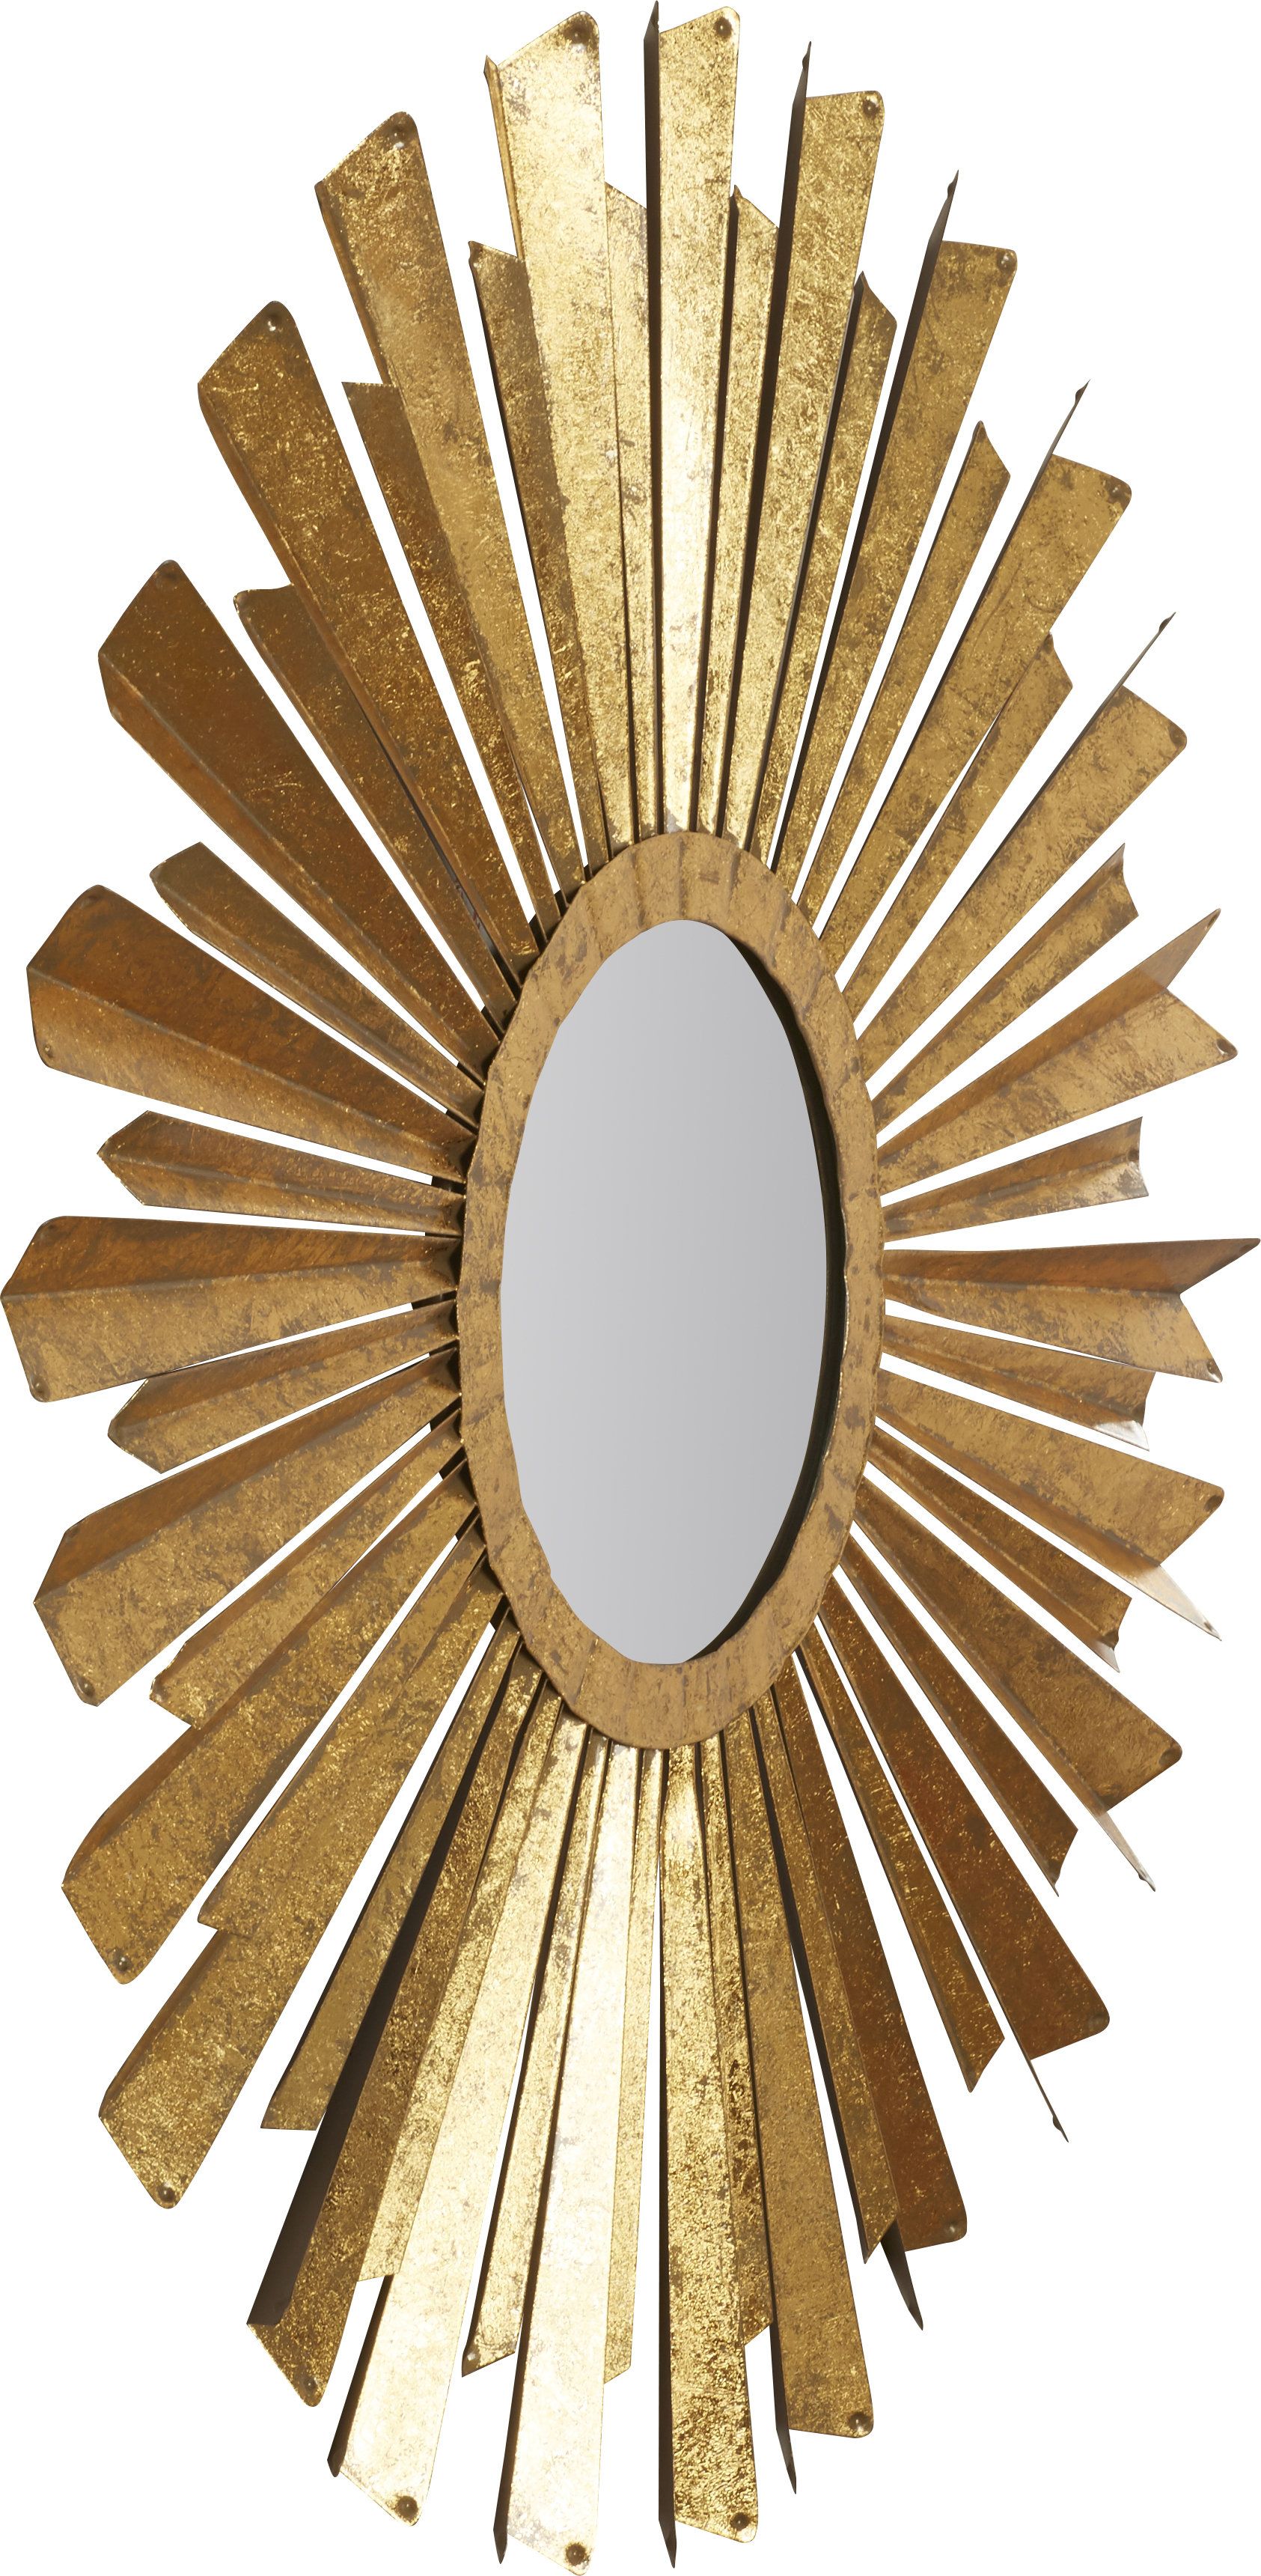 Willa Arlo Interiors Birksgate Sunburst Accent Mirror In Birksgate Sunburst Accent Mirrors (View 4 of 20)